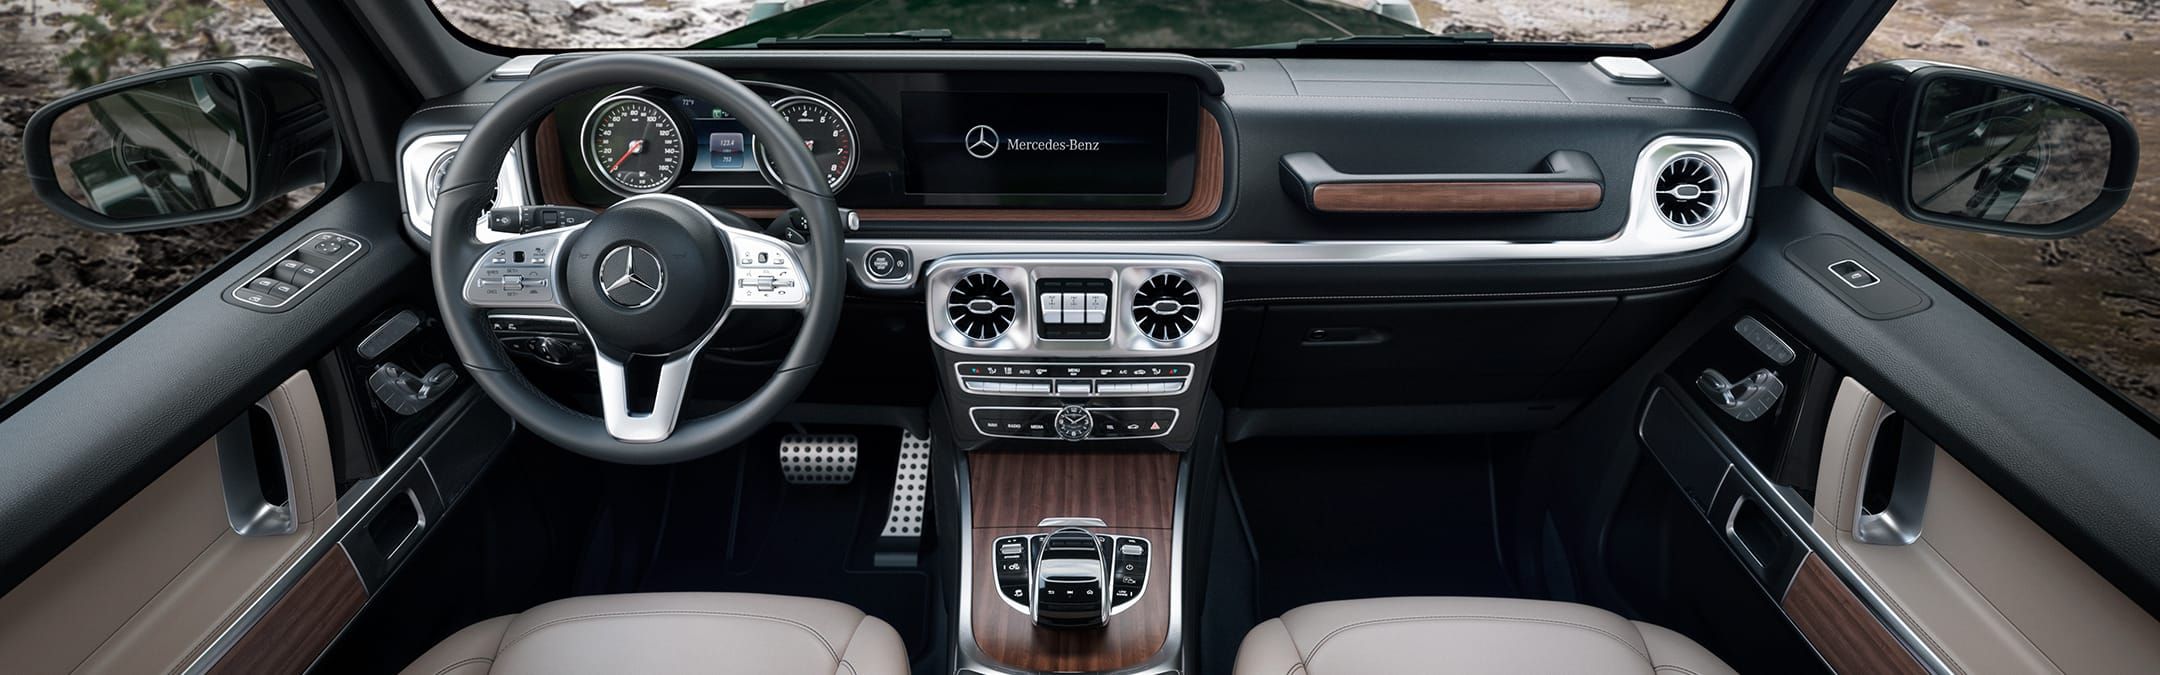 Mercedes-Benz interior 